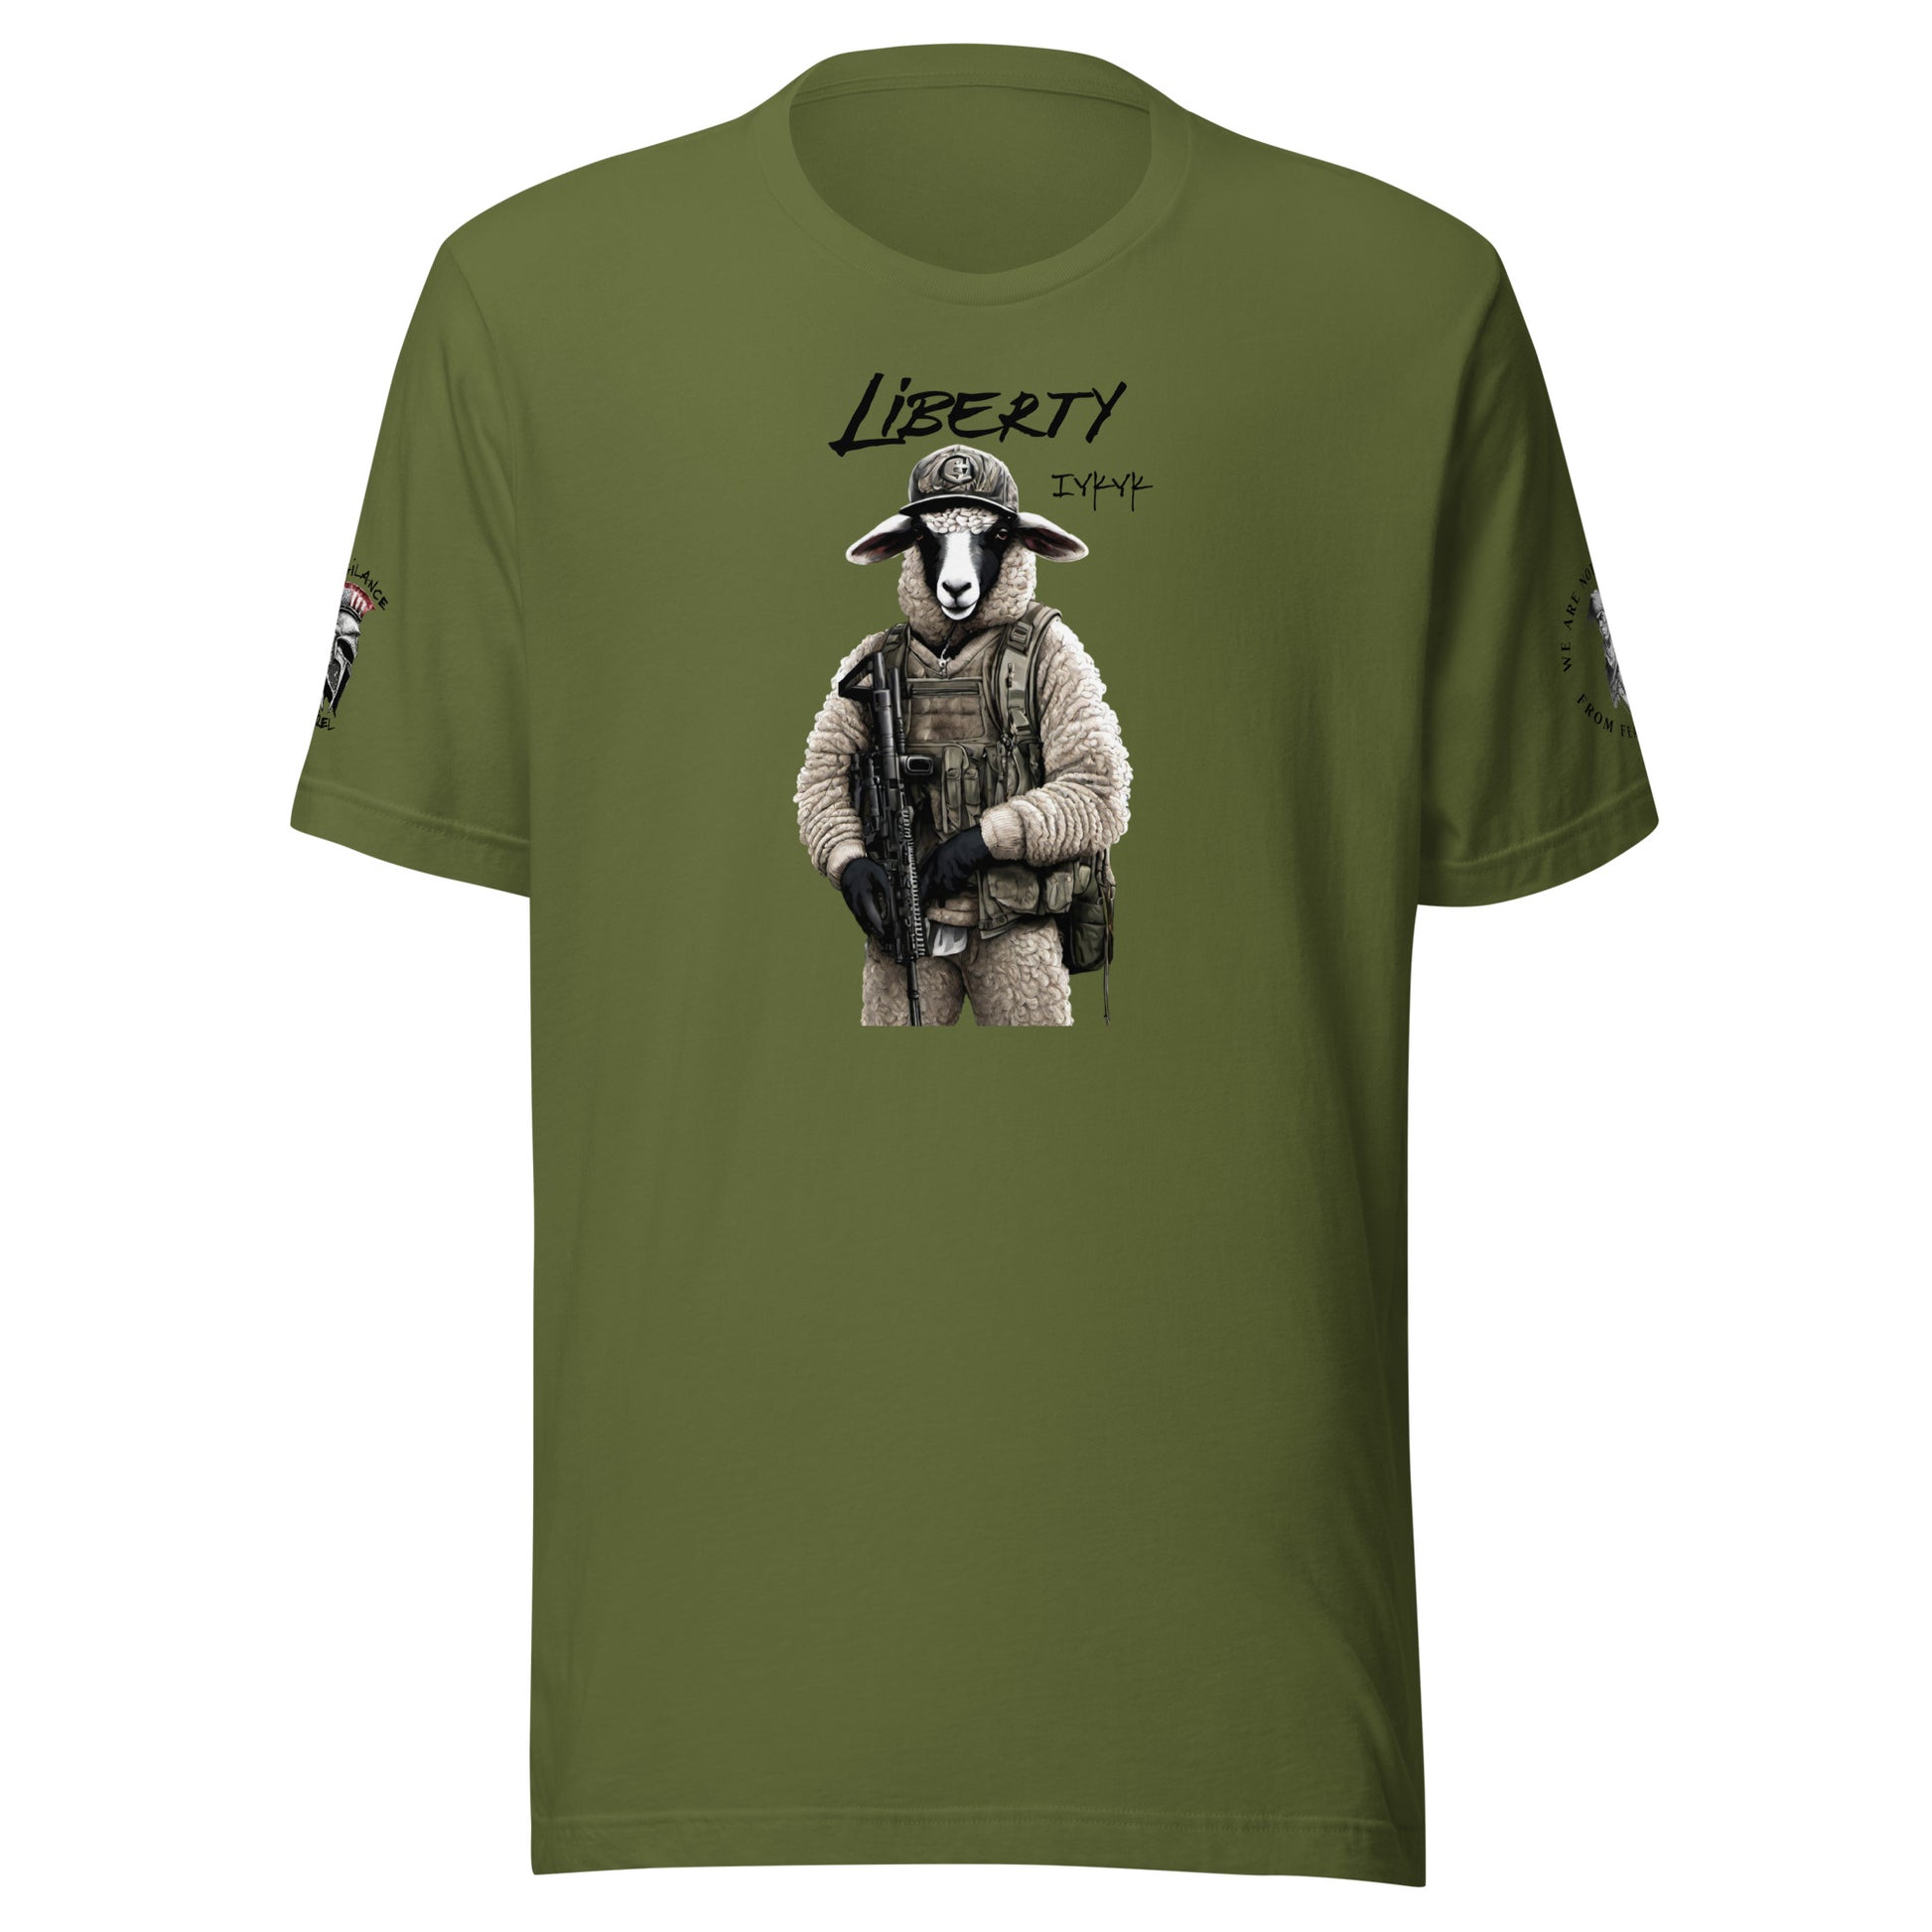 Liberty Lamb IYKYK (logo & minuteman sleeve) Limited Men's T-Shirt Olive